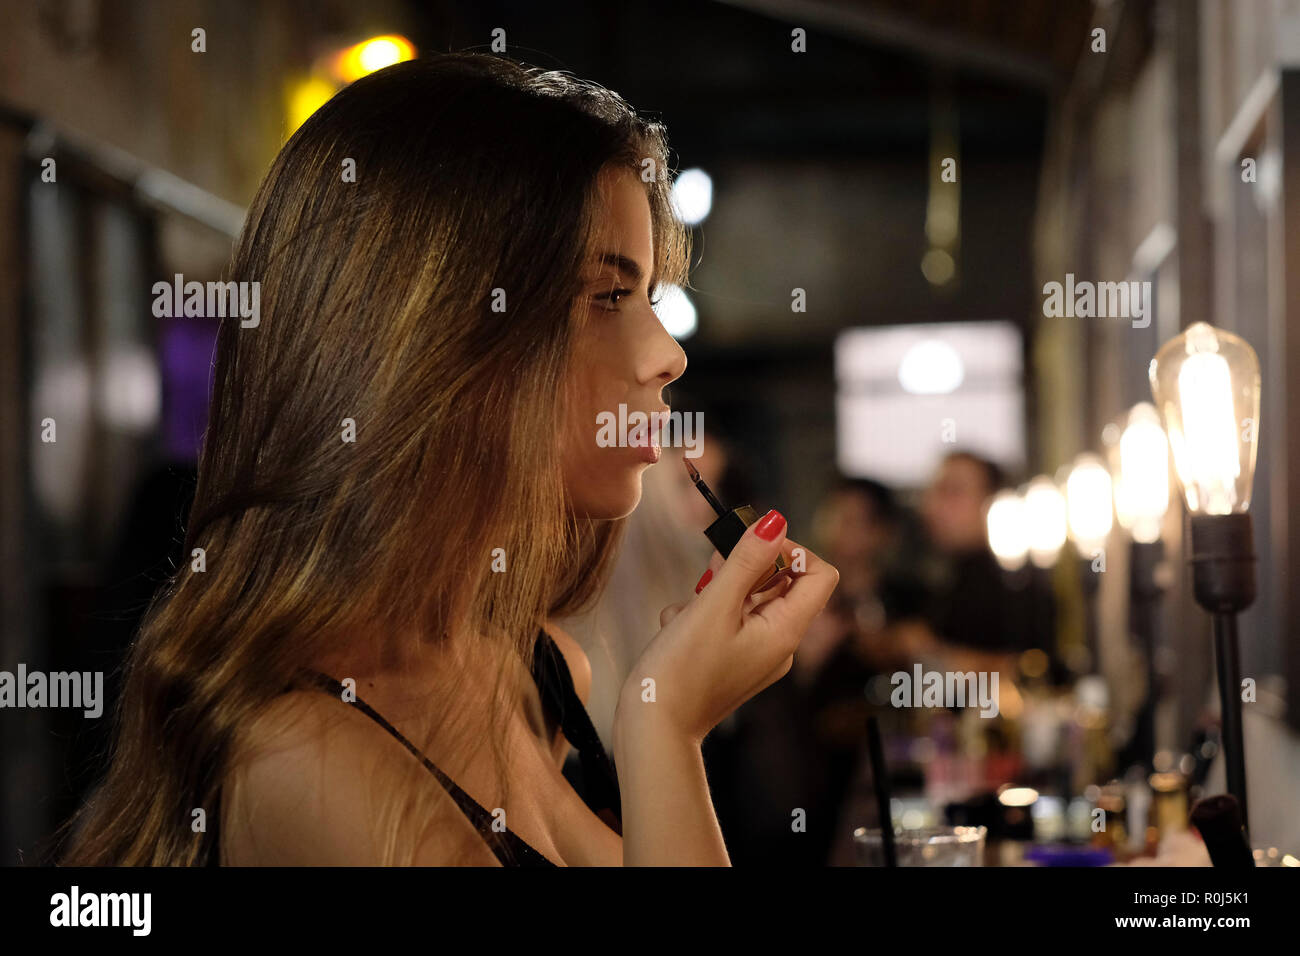 Young woman applying lipstick, Tel Aviv ISRAËL Banque D'Images